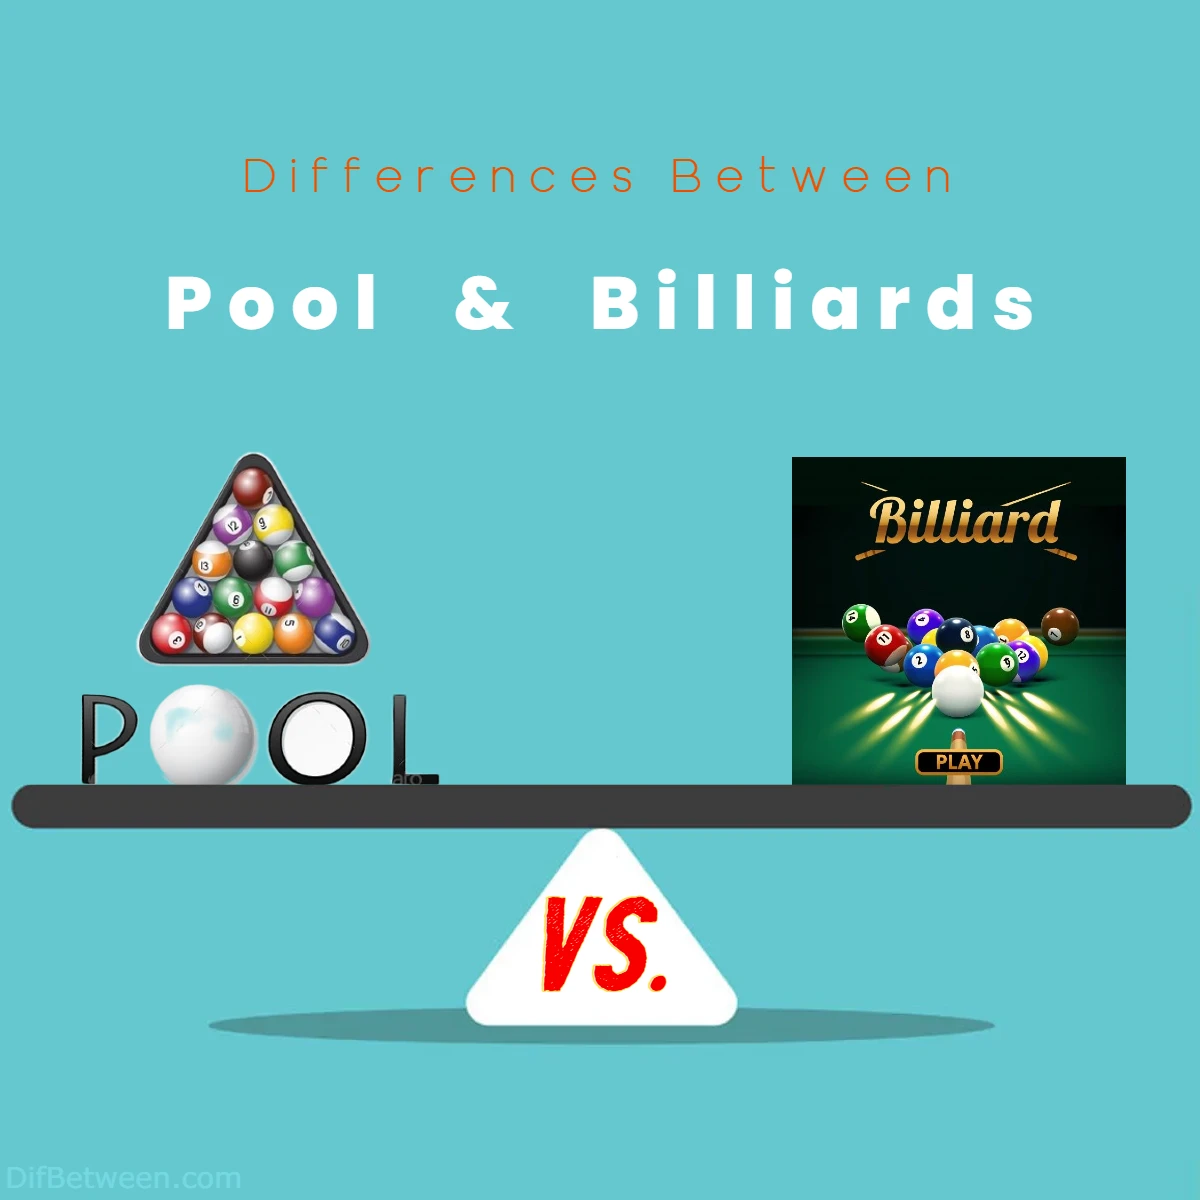 Differences Between Pool vs Billiards